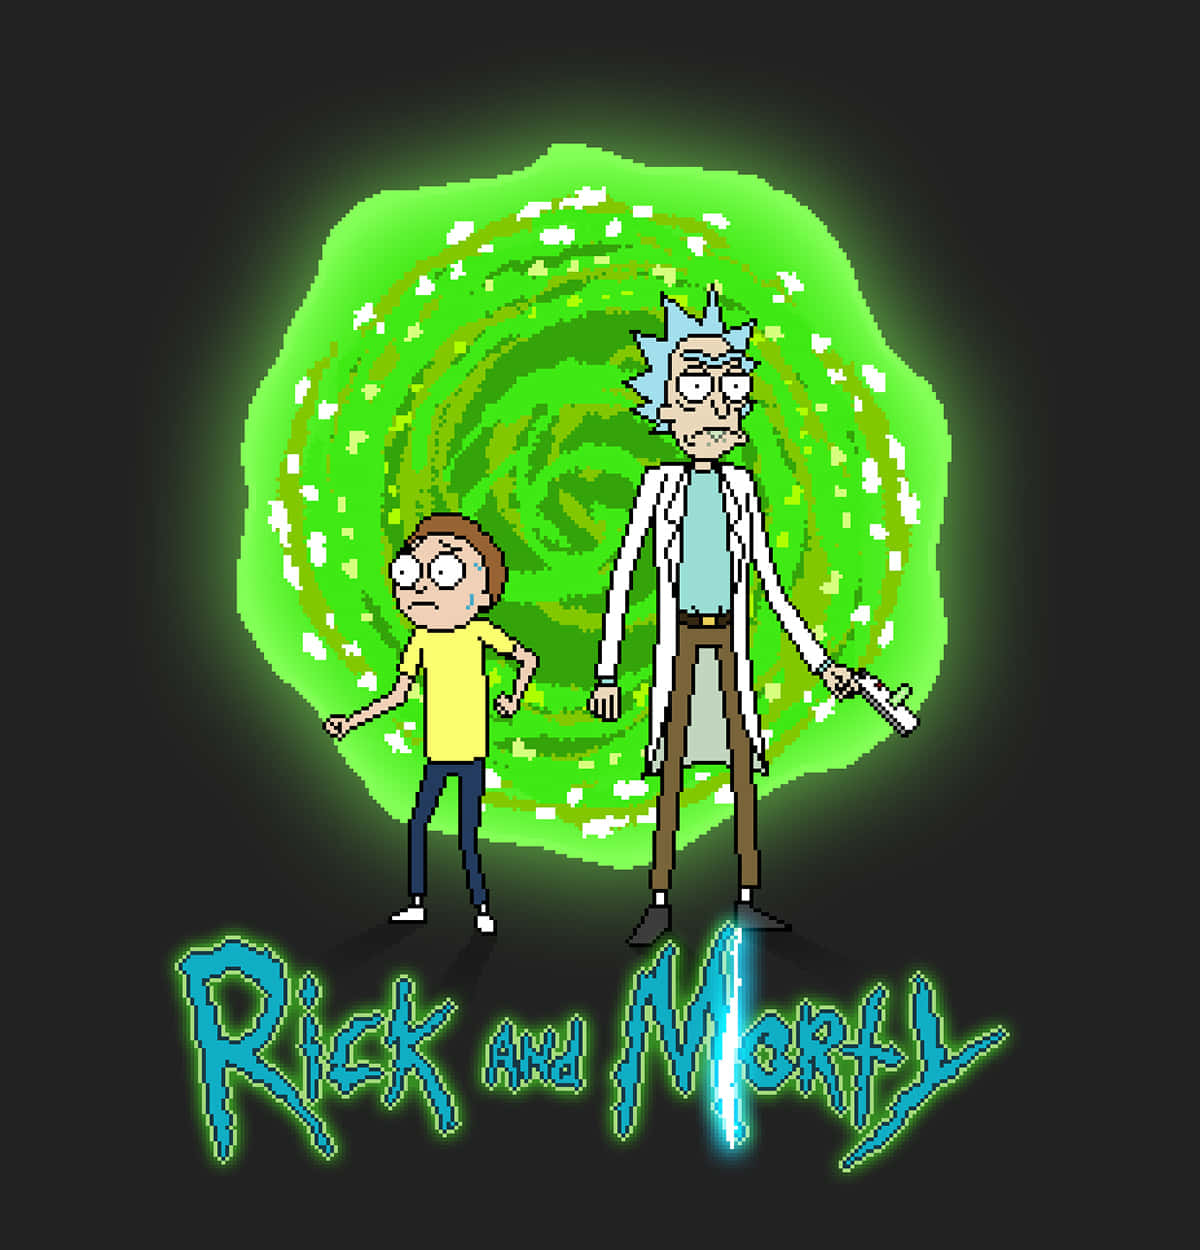 Ricksanchez Och Morty Smith Från Rick And Morty.